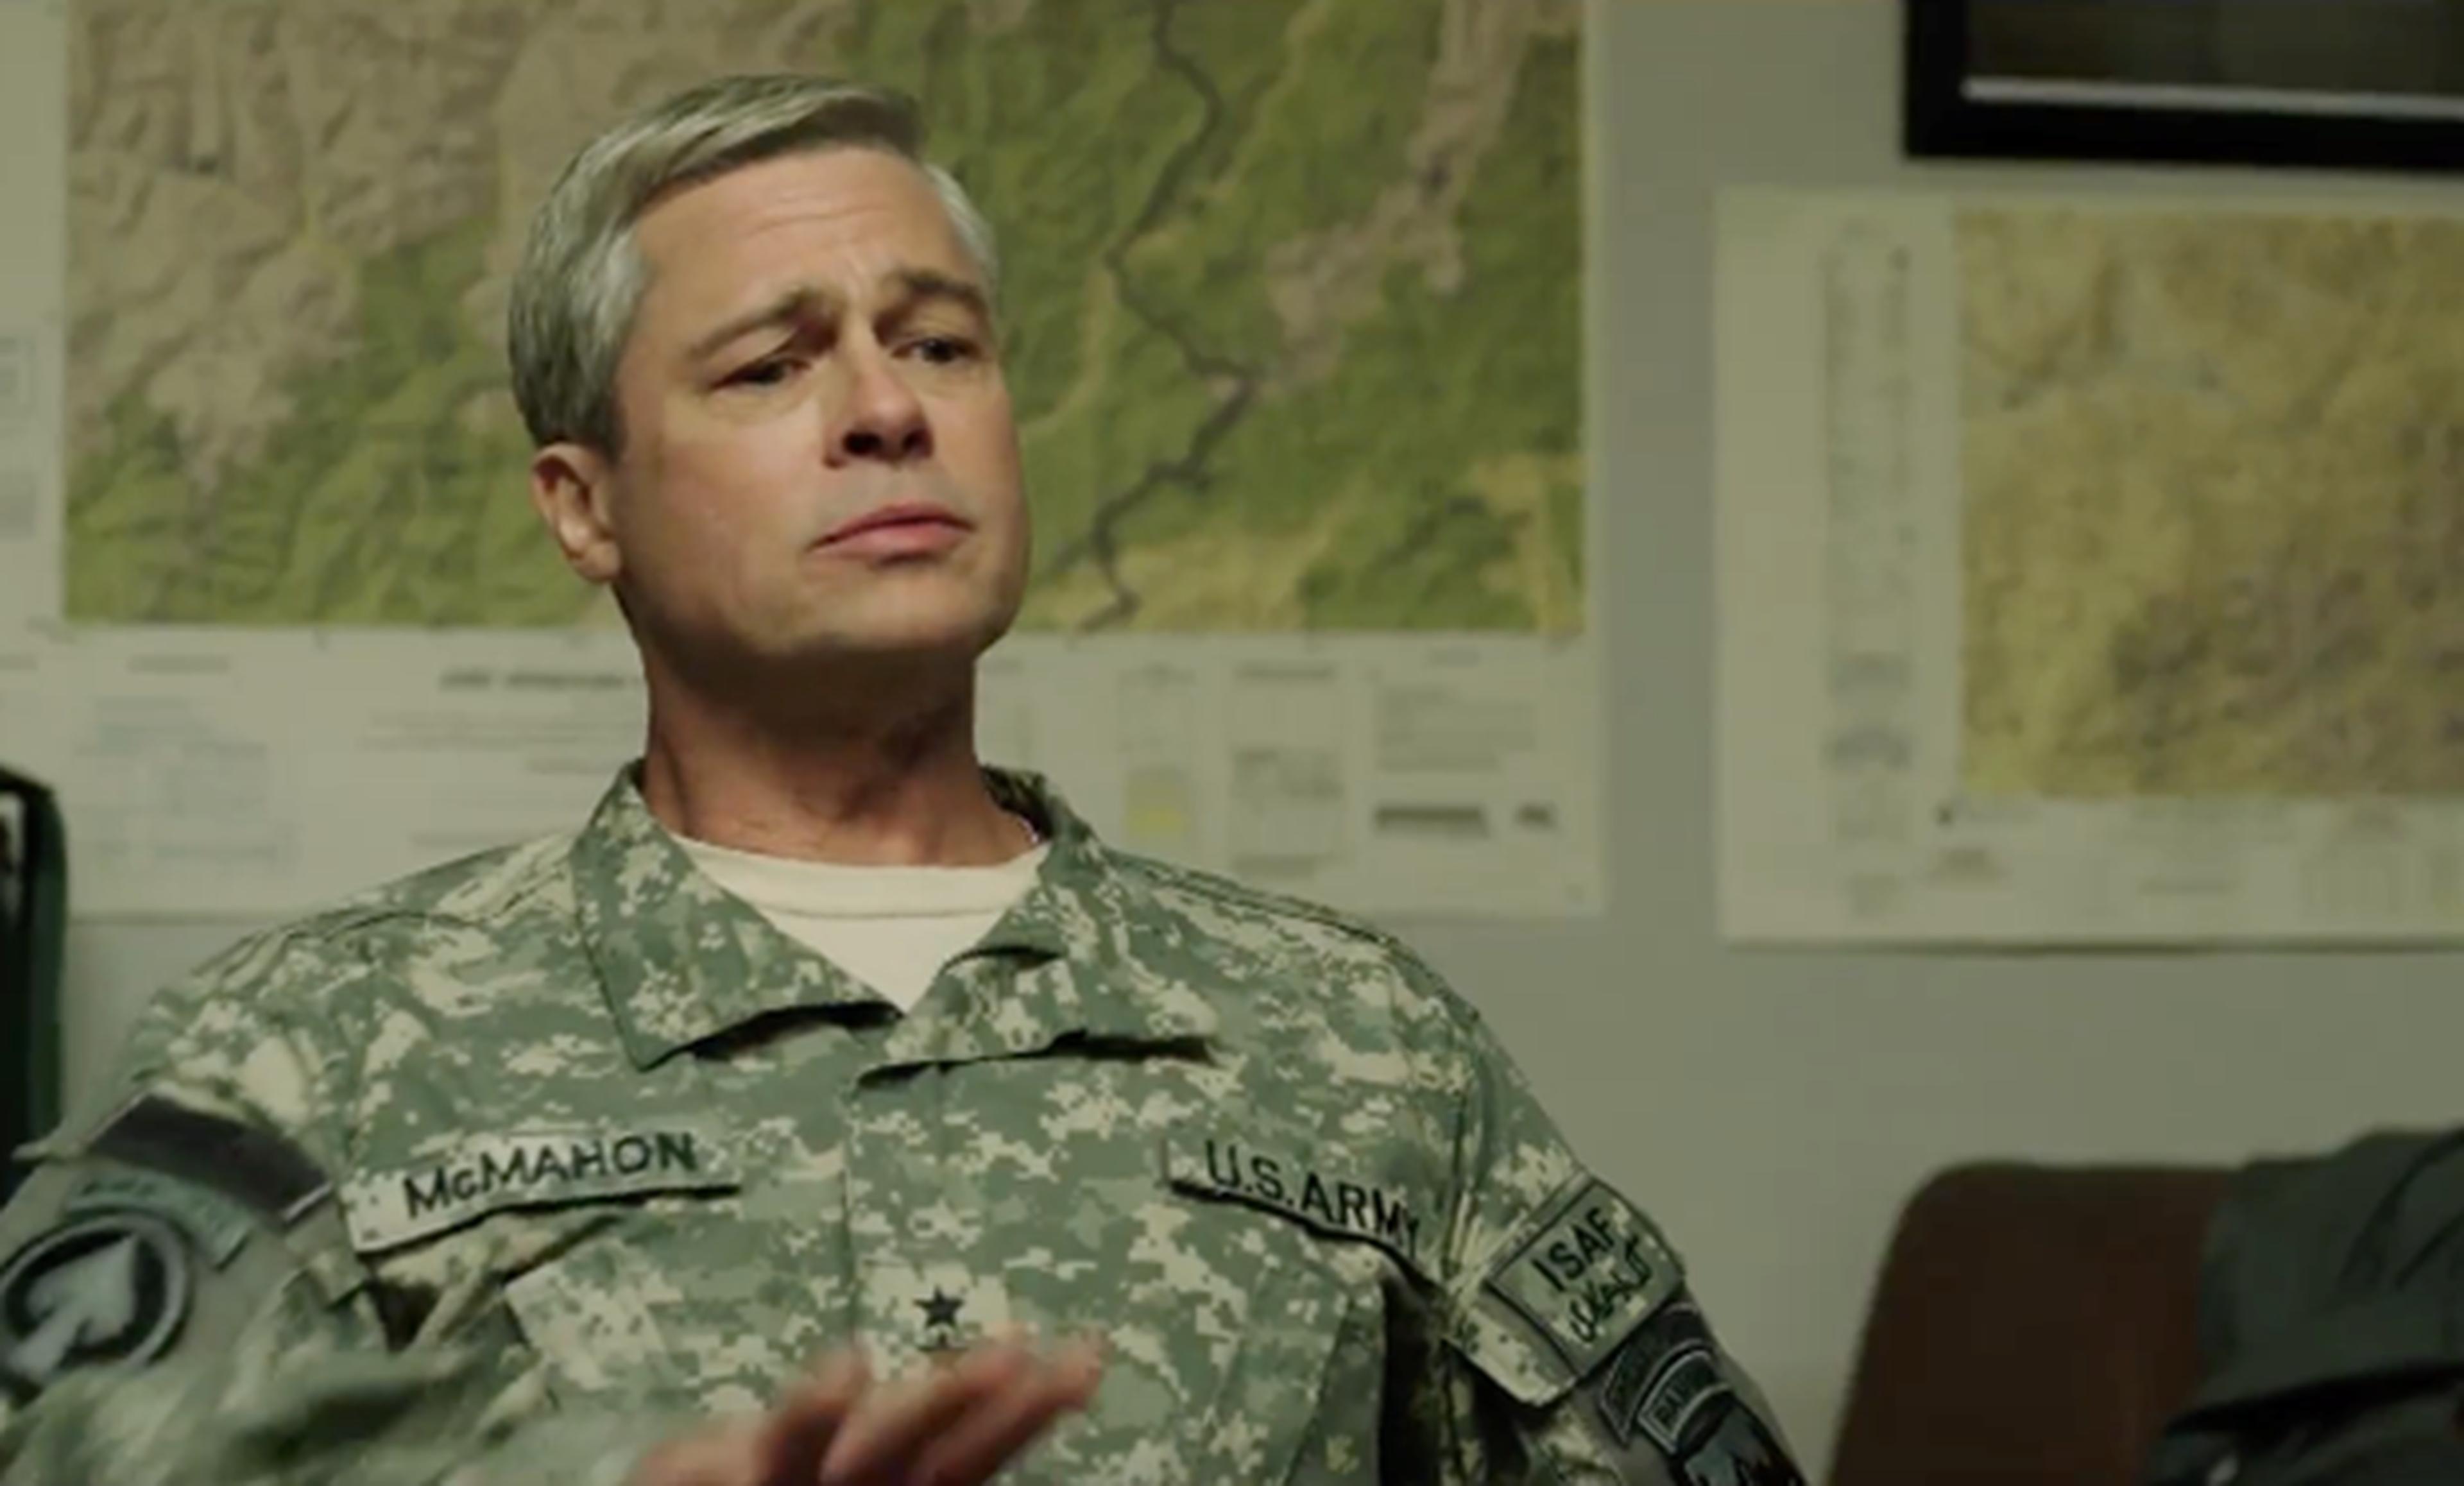 Máquina de guerra - Tráiler subtitulado en español - Producción original de Netflix protagonizada por Brad Pitt